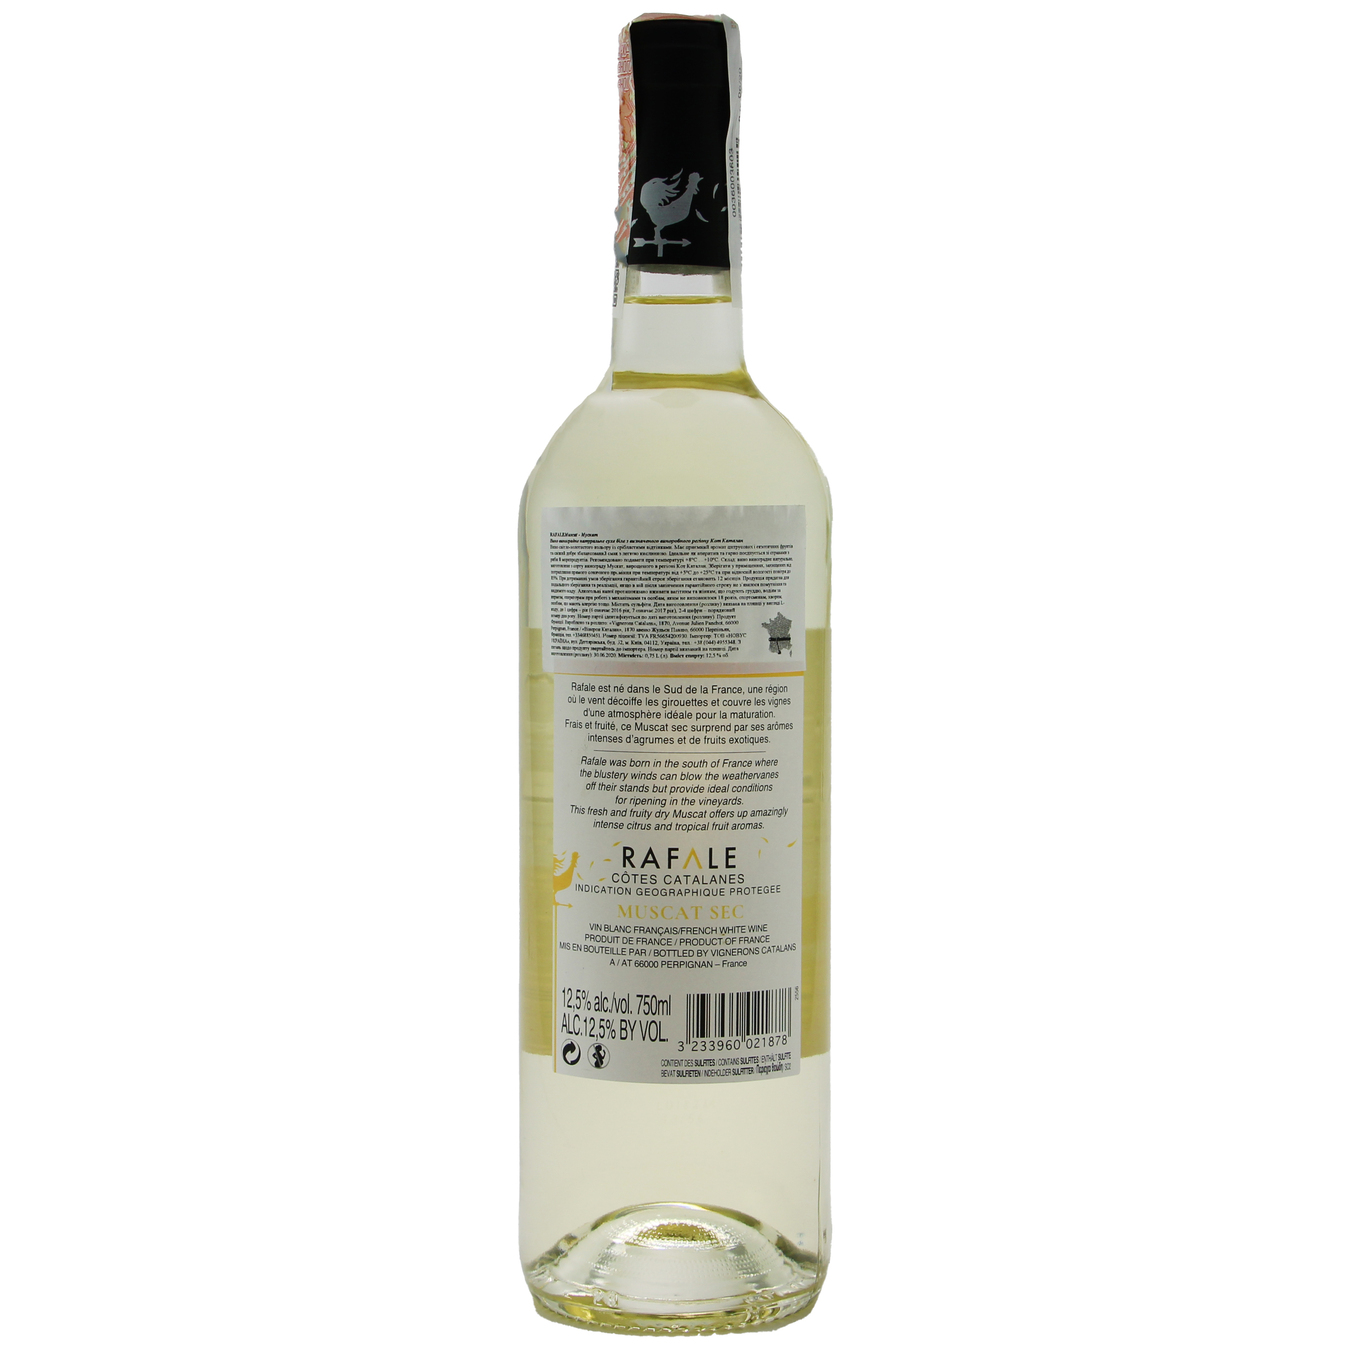 Rafale Muscat Sec Cotes Catalanes white dry wine 12.5% 0,75l 2